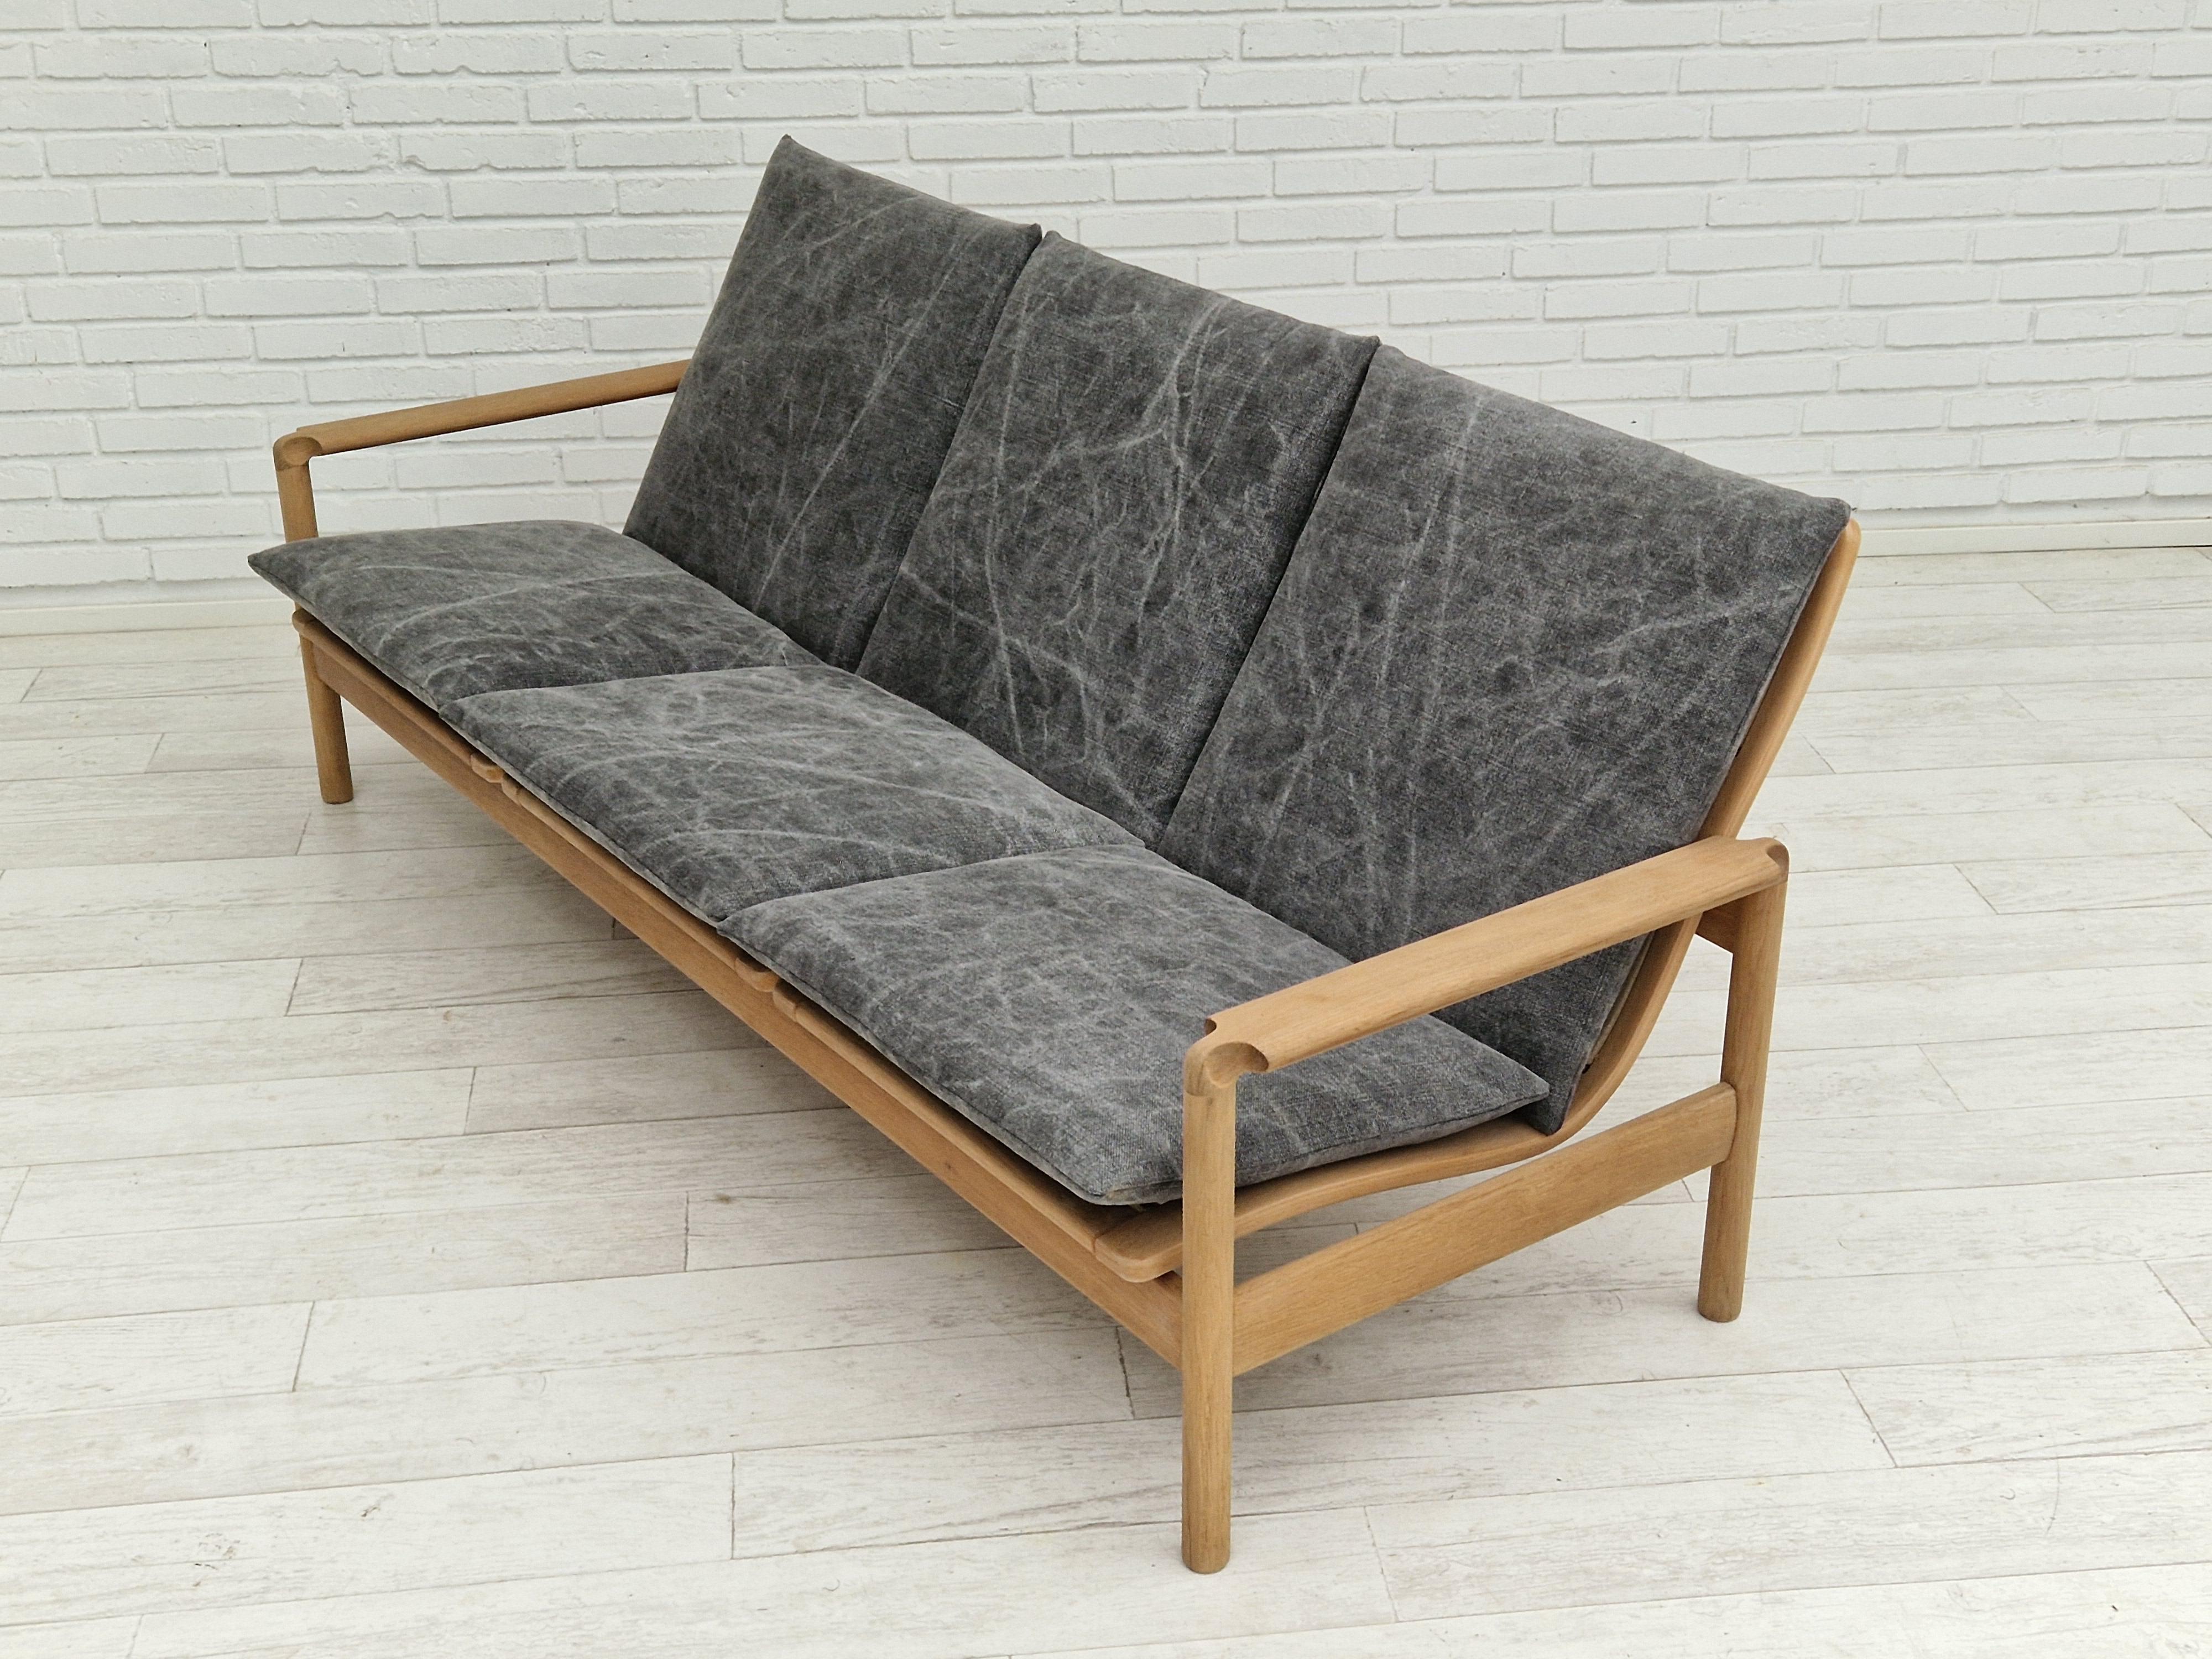 70s wood furniture